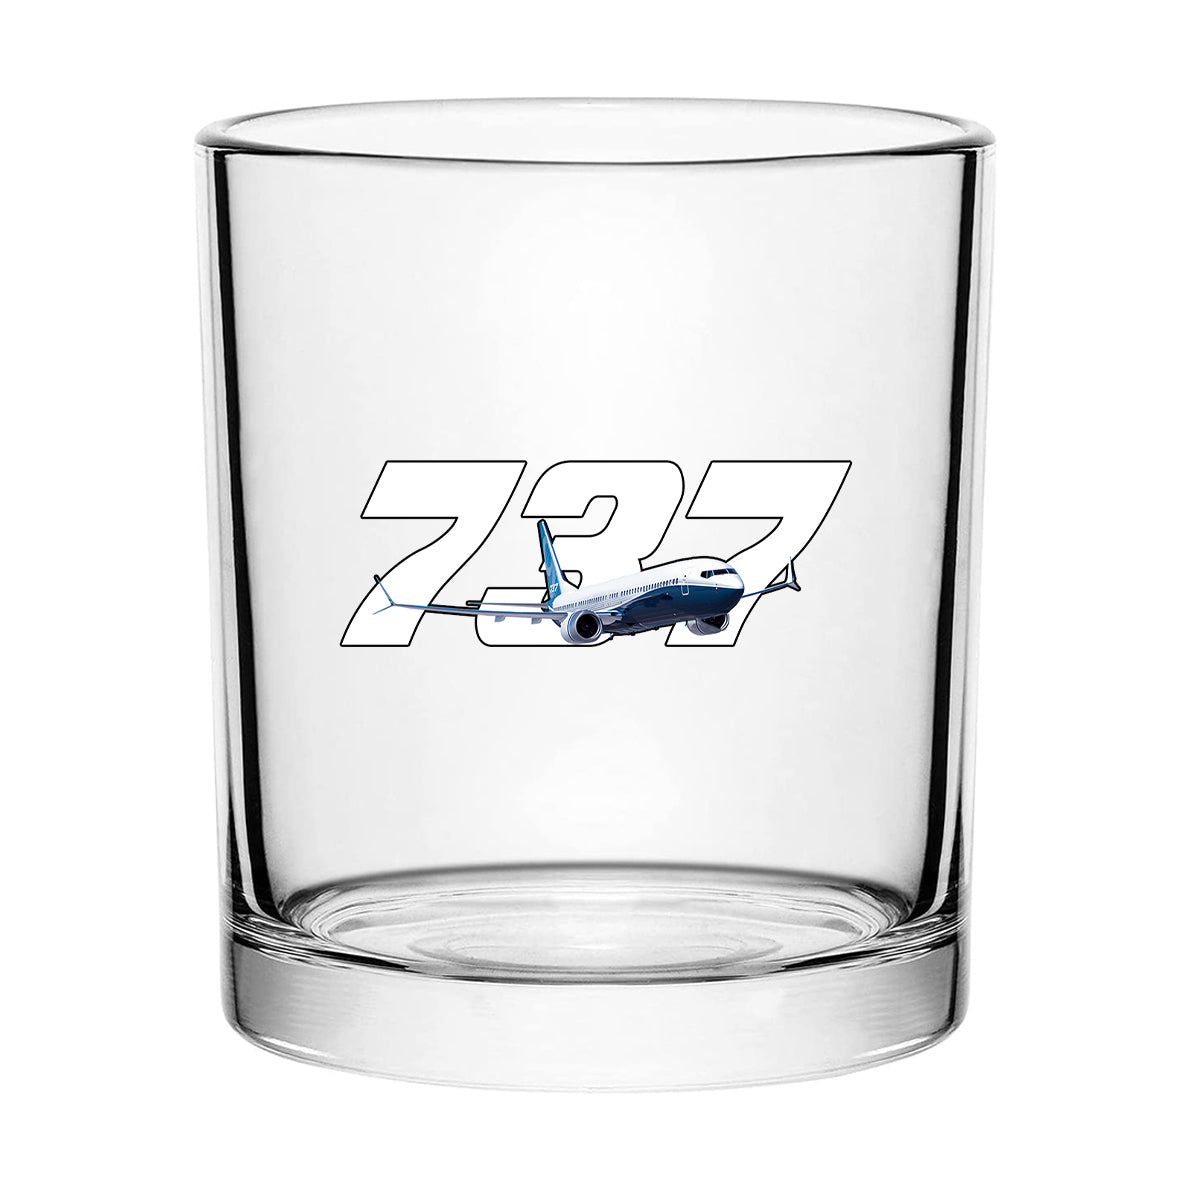 Super Boeing 737 Designed Special Whiskey Glasses